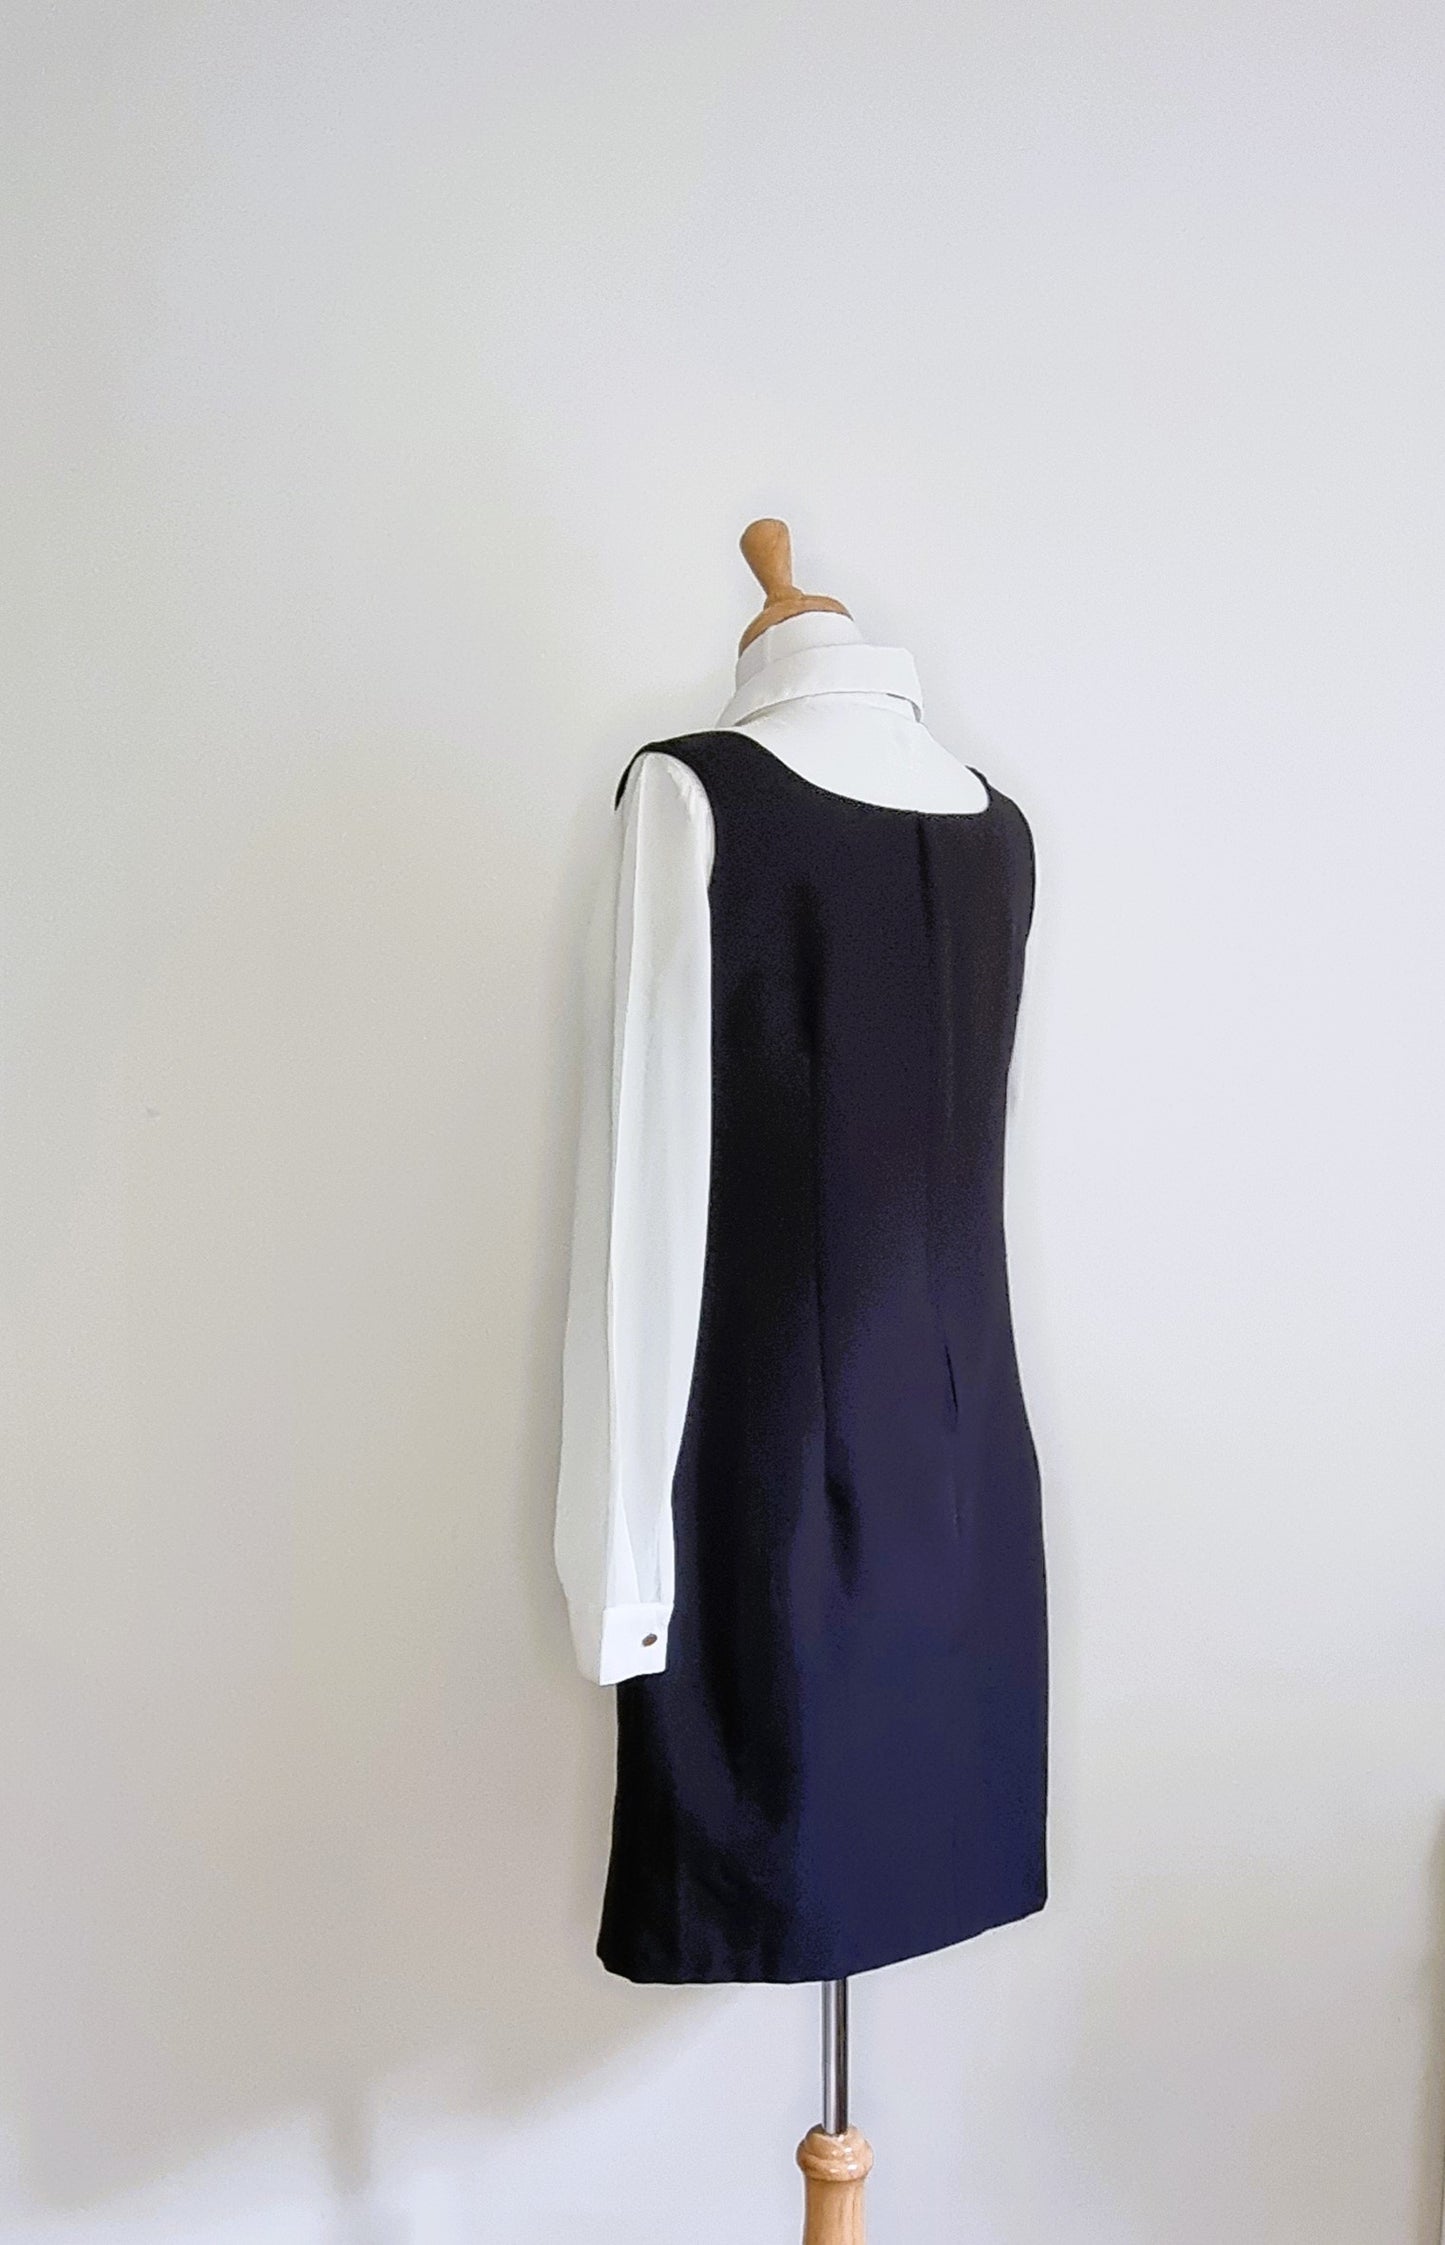 Kelso - Black tunic sleeveless dress